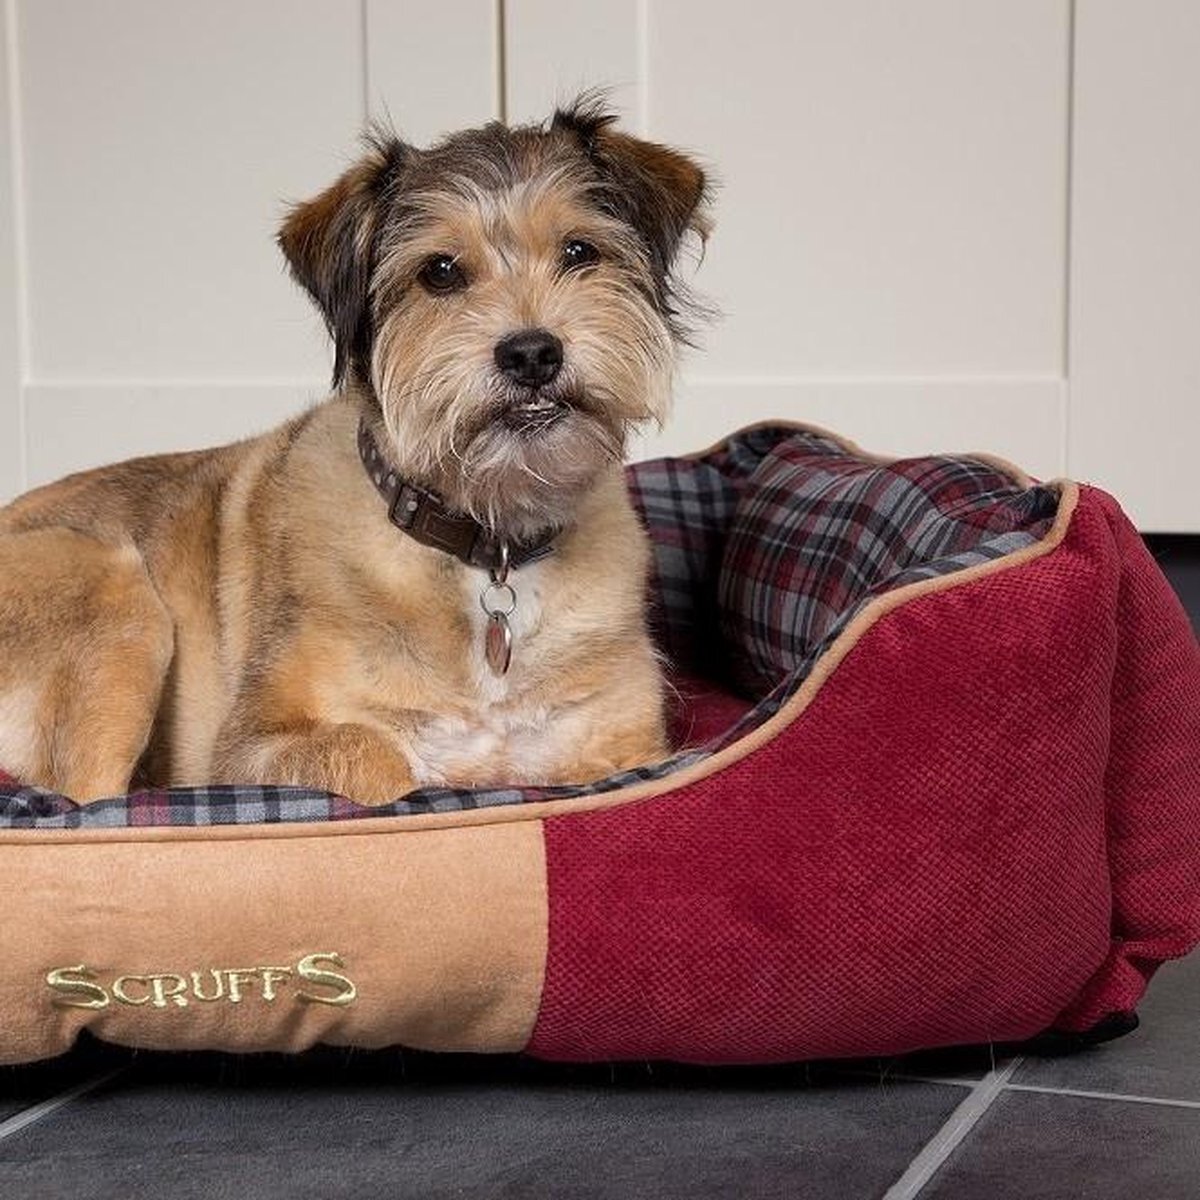 Scruffs Stevige Hondenmand van Hoogwaardige Chenille stof met anti-slip onderzijde - Highland Box Bed - Blauw, Rood of Grijs in S/M/L/XL - Kleur: Grijs, Maat: Large grijs